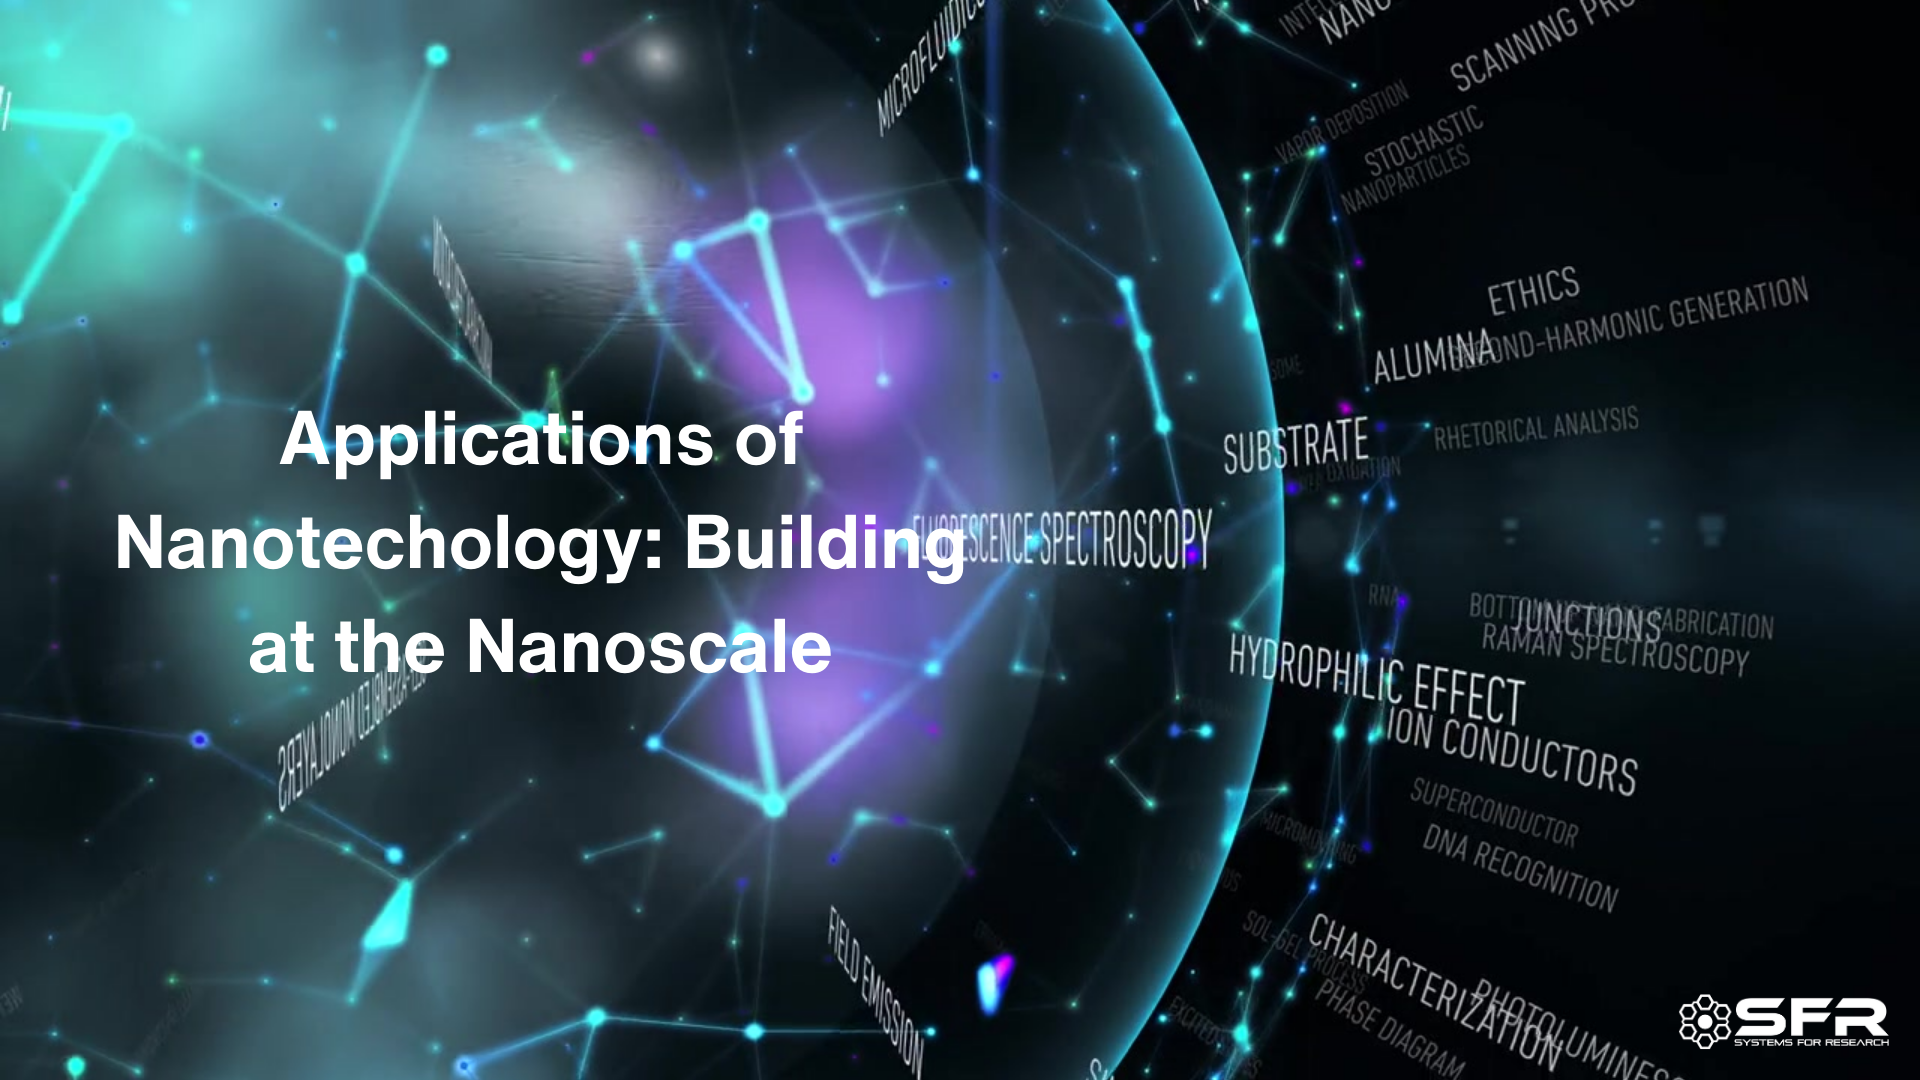 Applications of Nanotechnology: Building at the Nanoscale